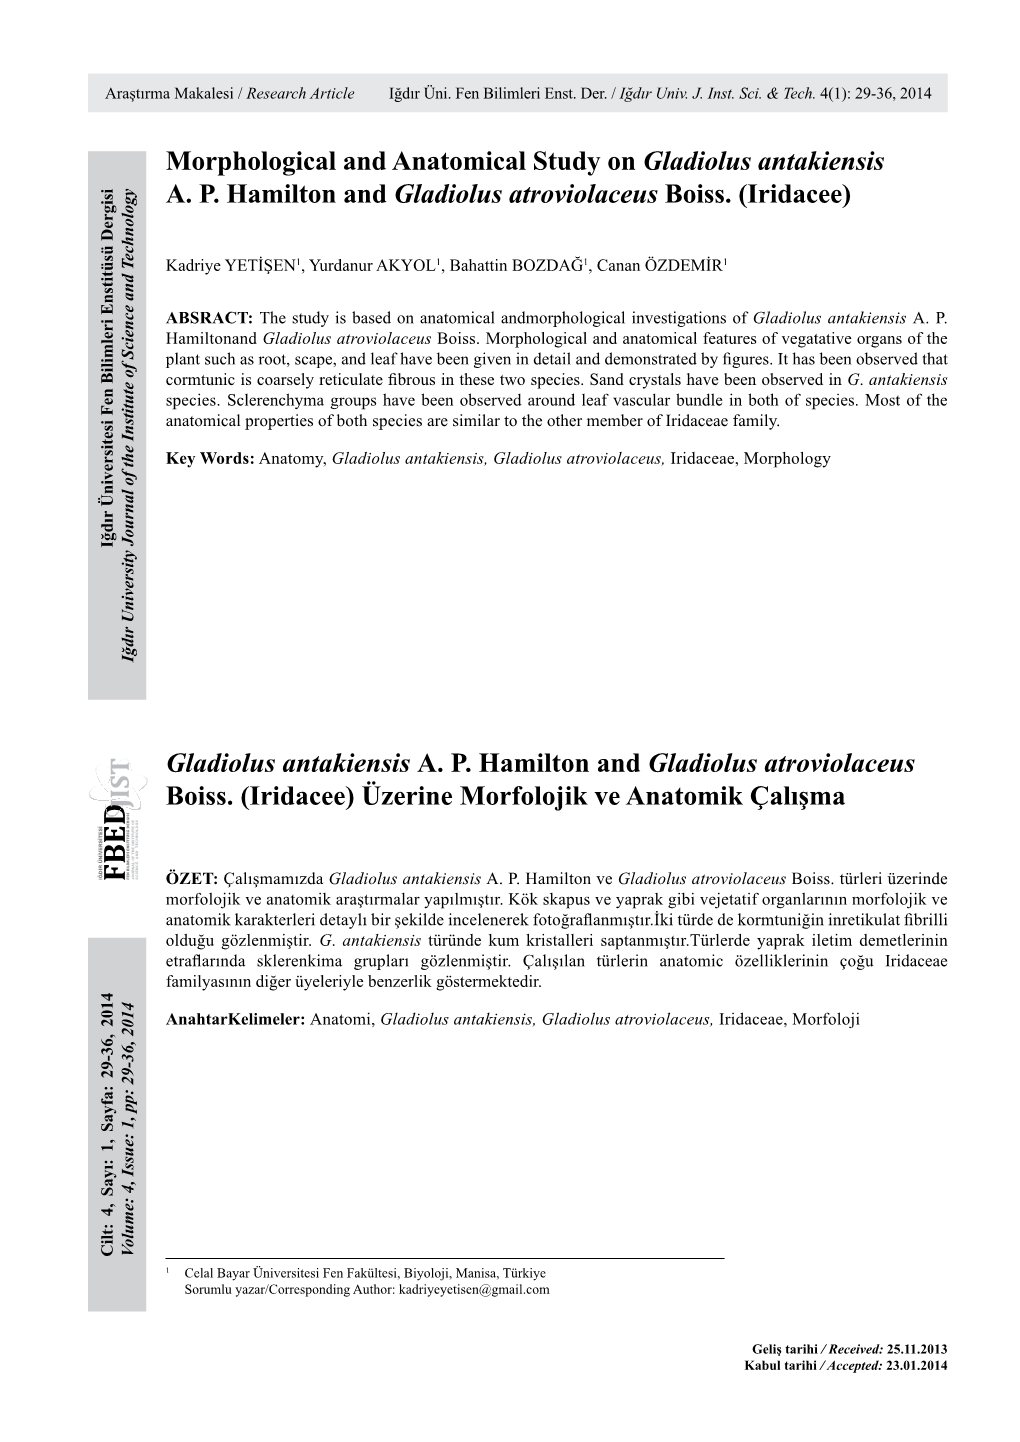 Morphological and Anatomical Study on Gladiolus Antakiensis A. P. Hamilton and Gladiolus Atroviolaceus Boiss. (Iridacee) Gladio